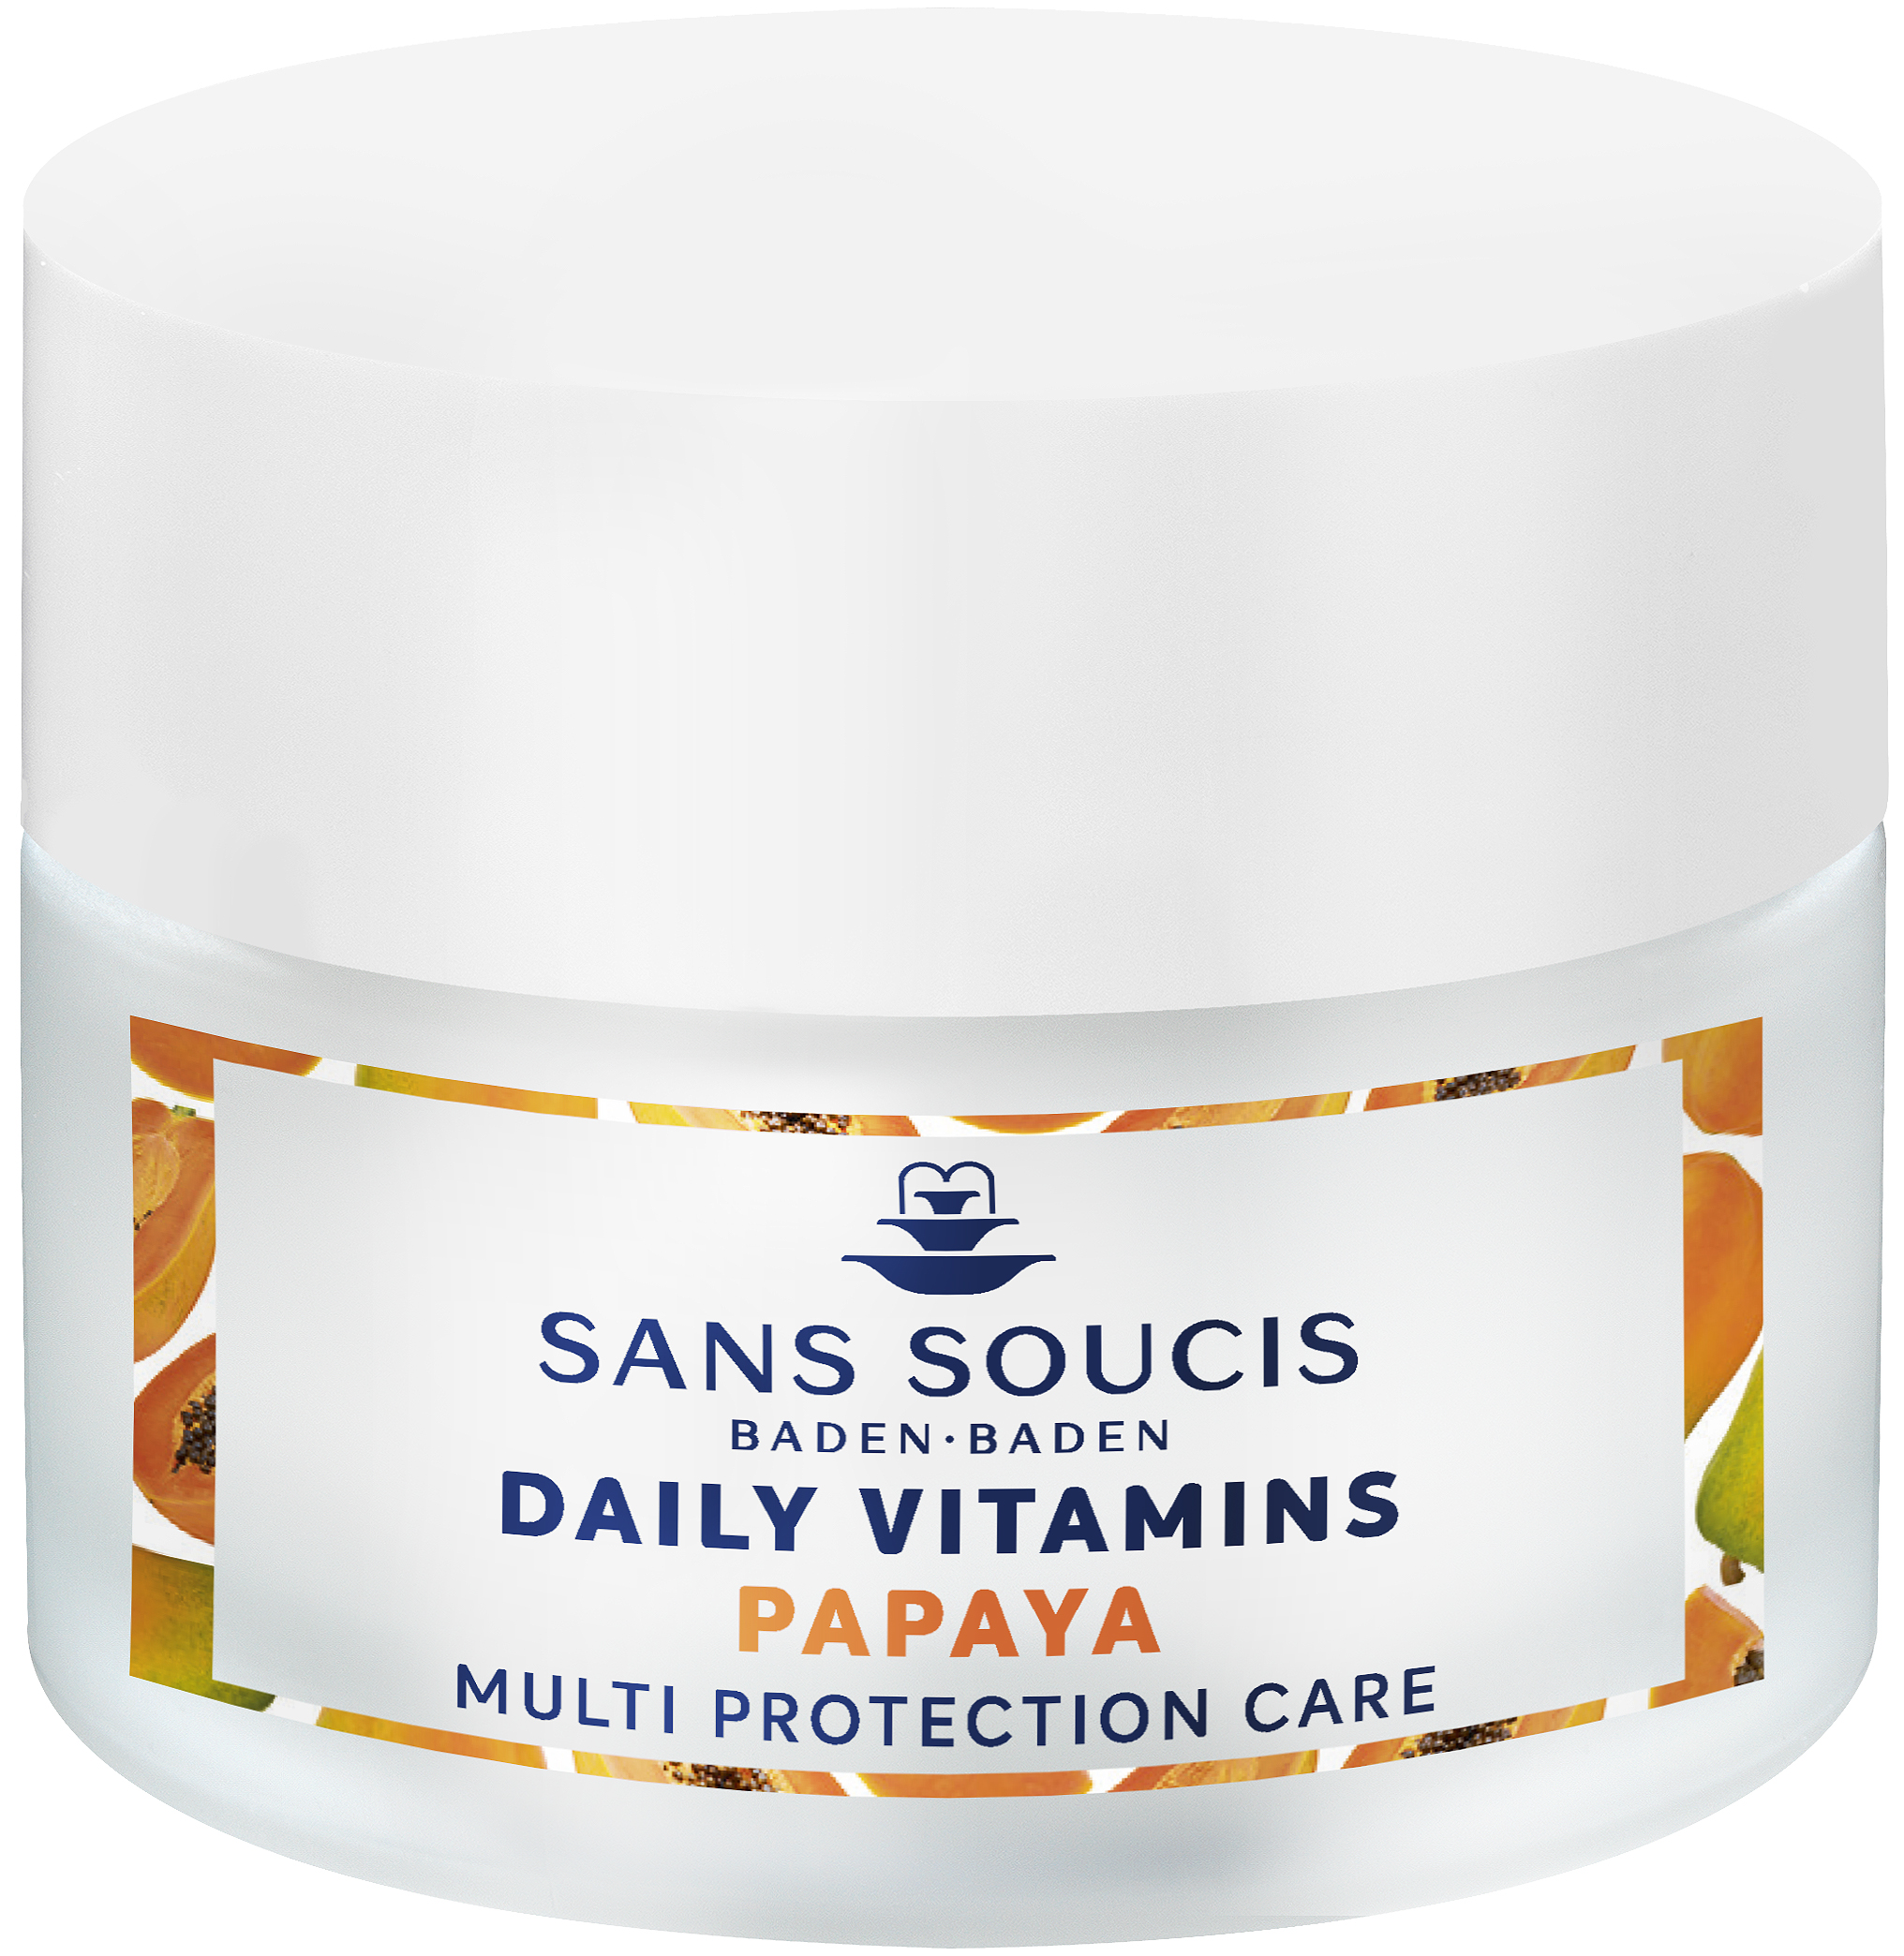 Sans Soucis Daily Vitamins Papaya Multi Protection Care 50 ml